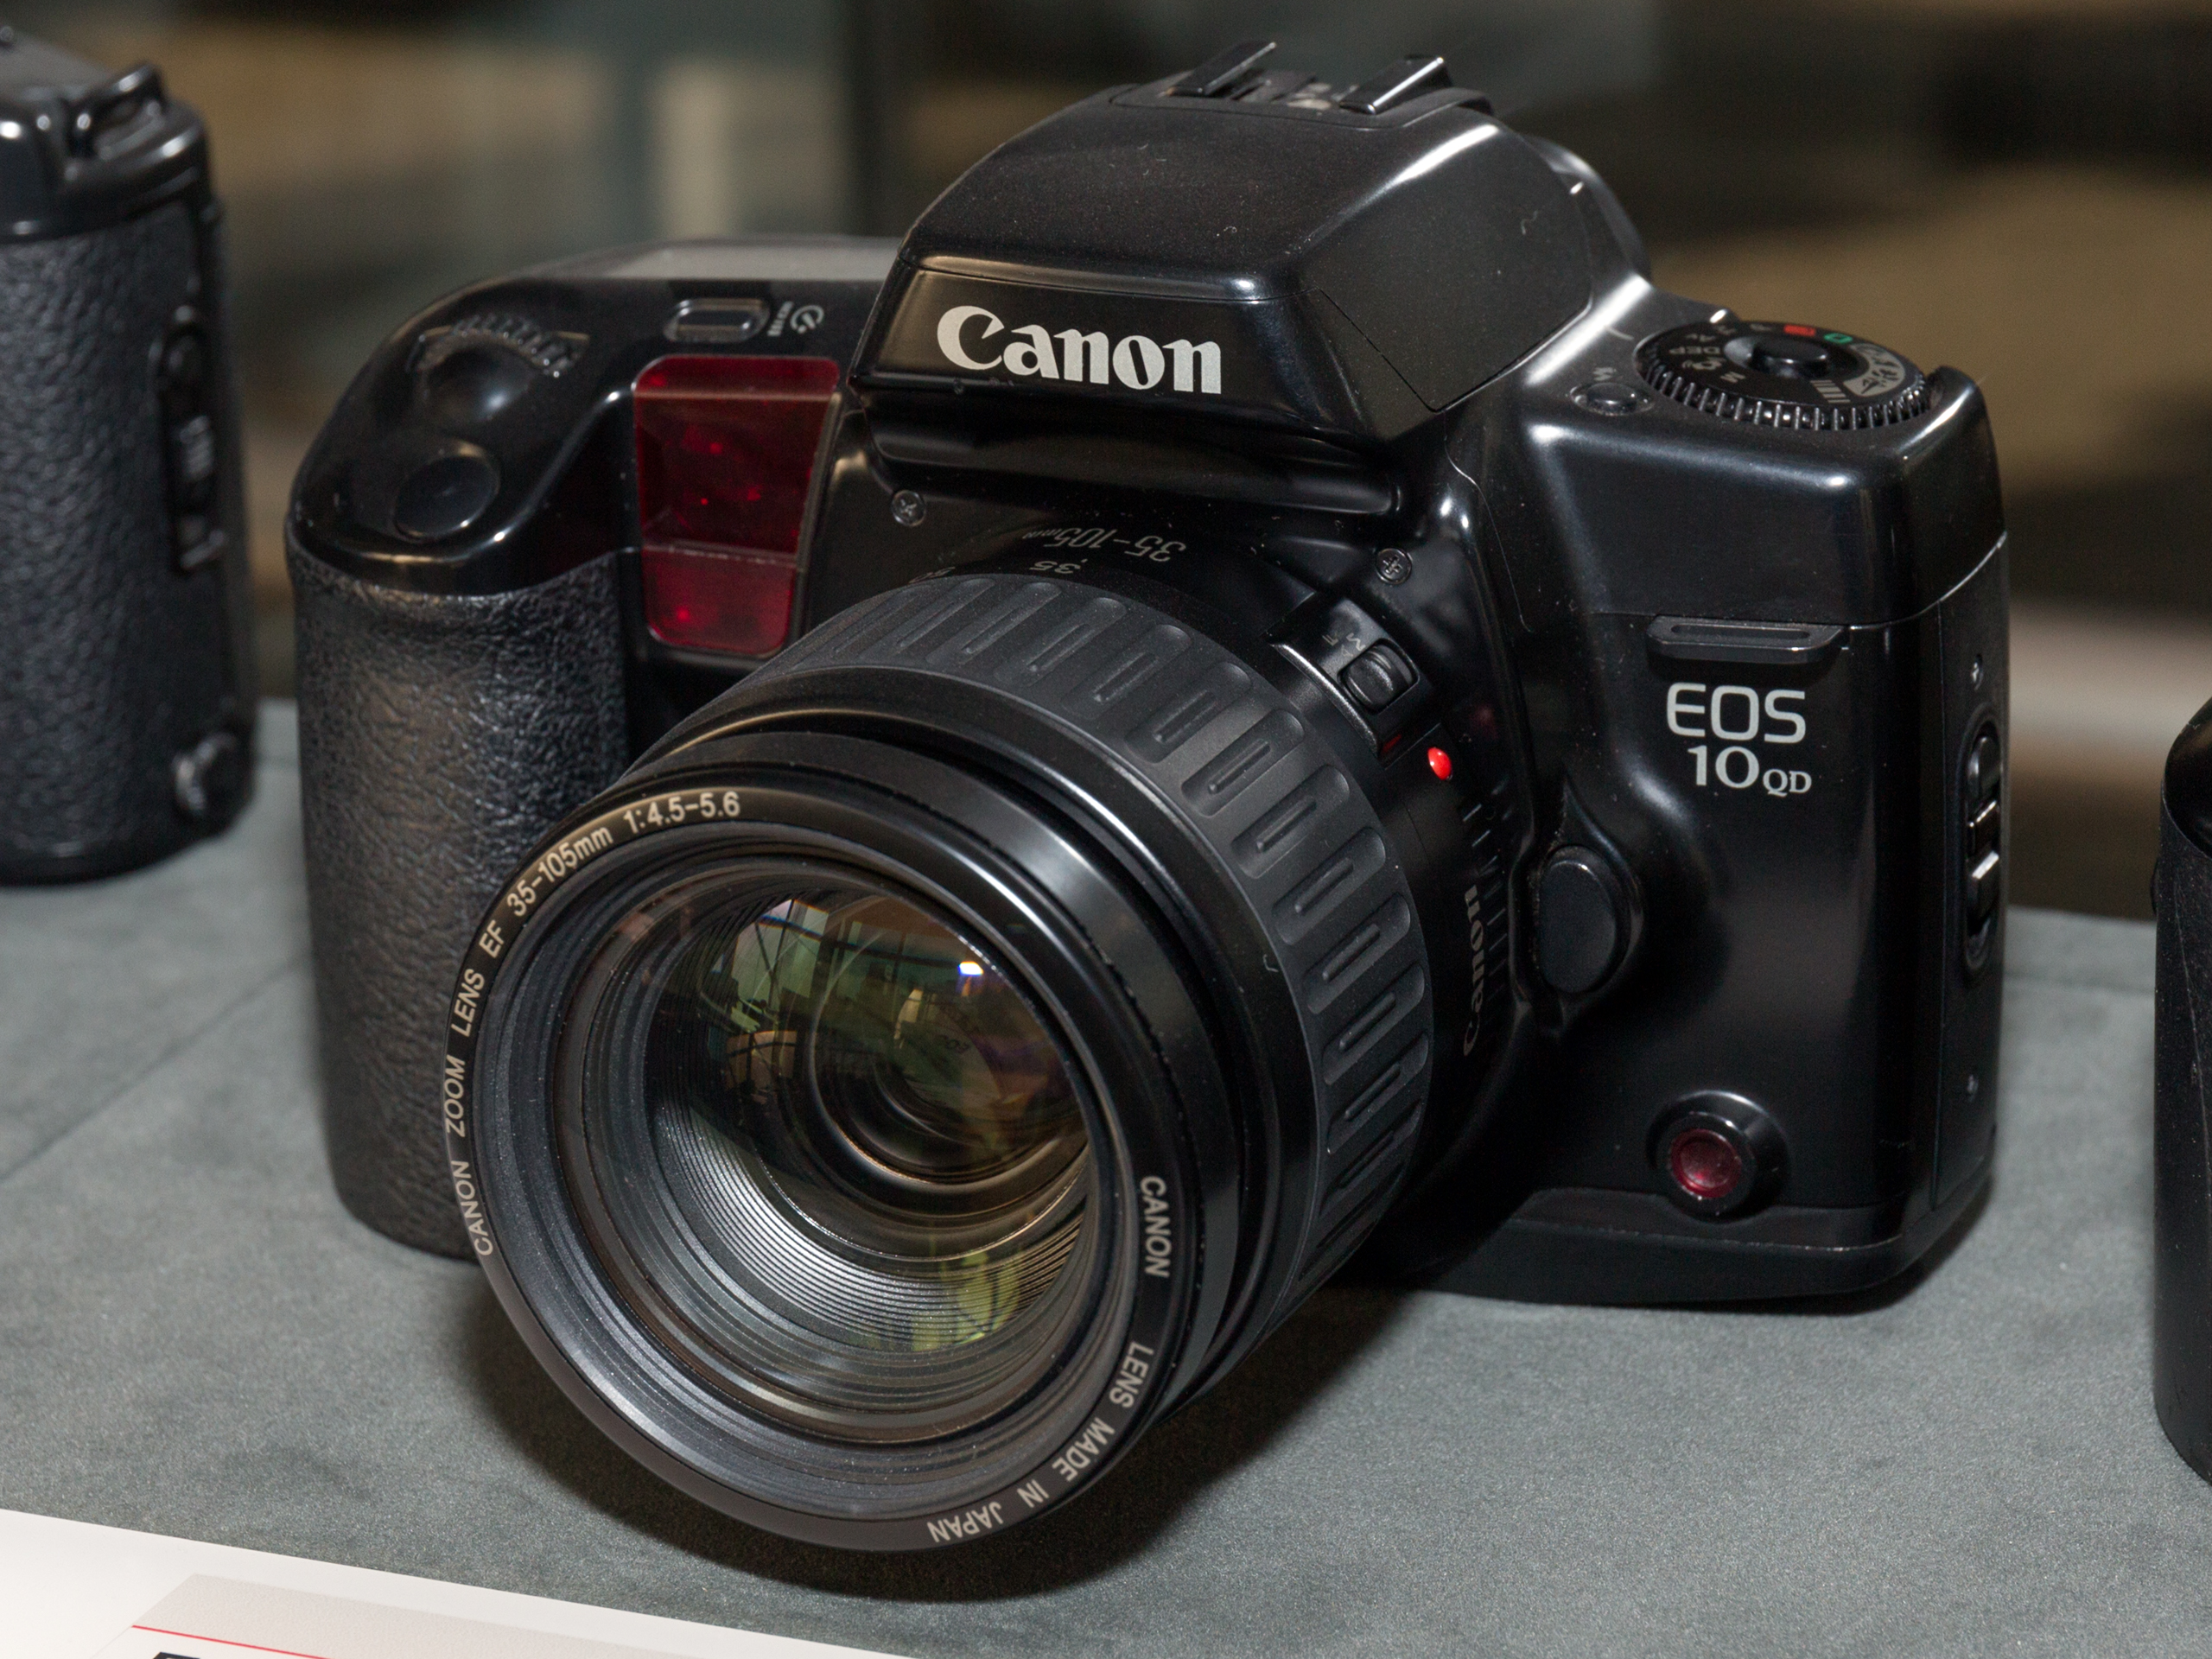 Canon EOS 10 QD front-left 2016 Canon Plaza S